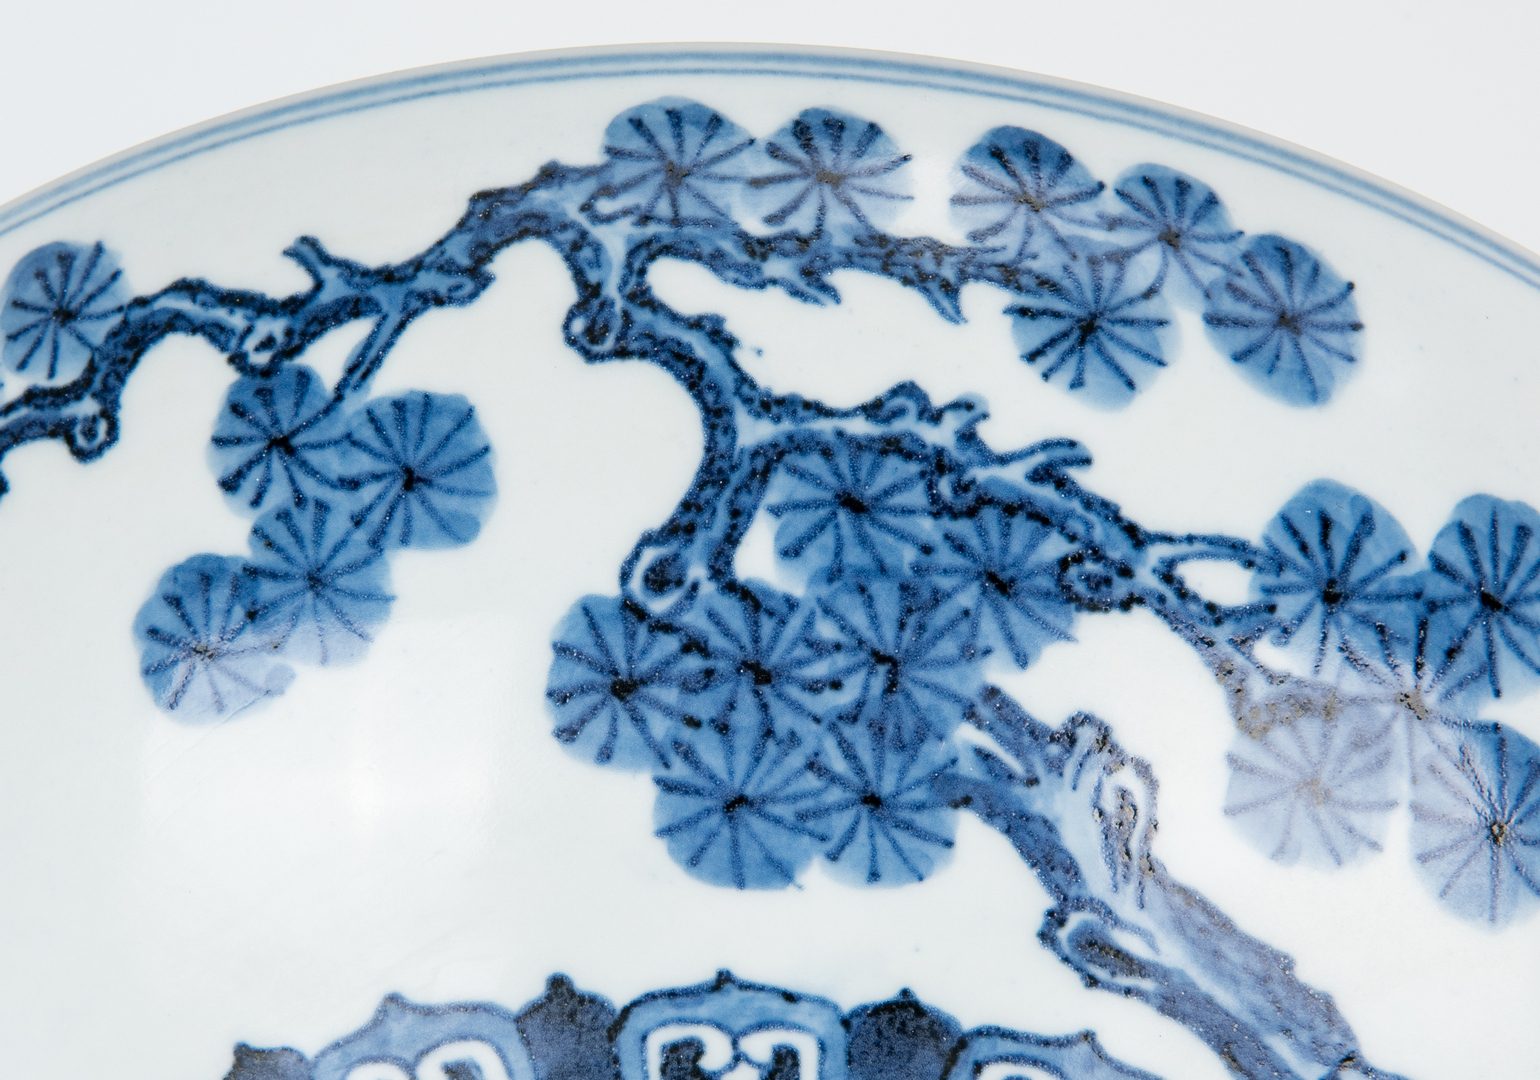 Lot 459: Chinese Blue & White Porcelain Fruit Bowl